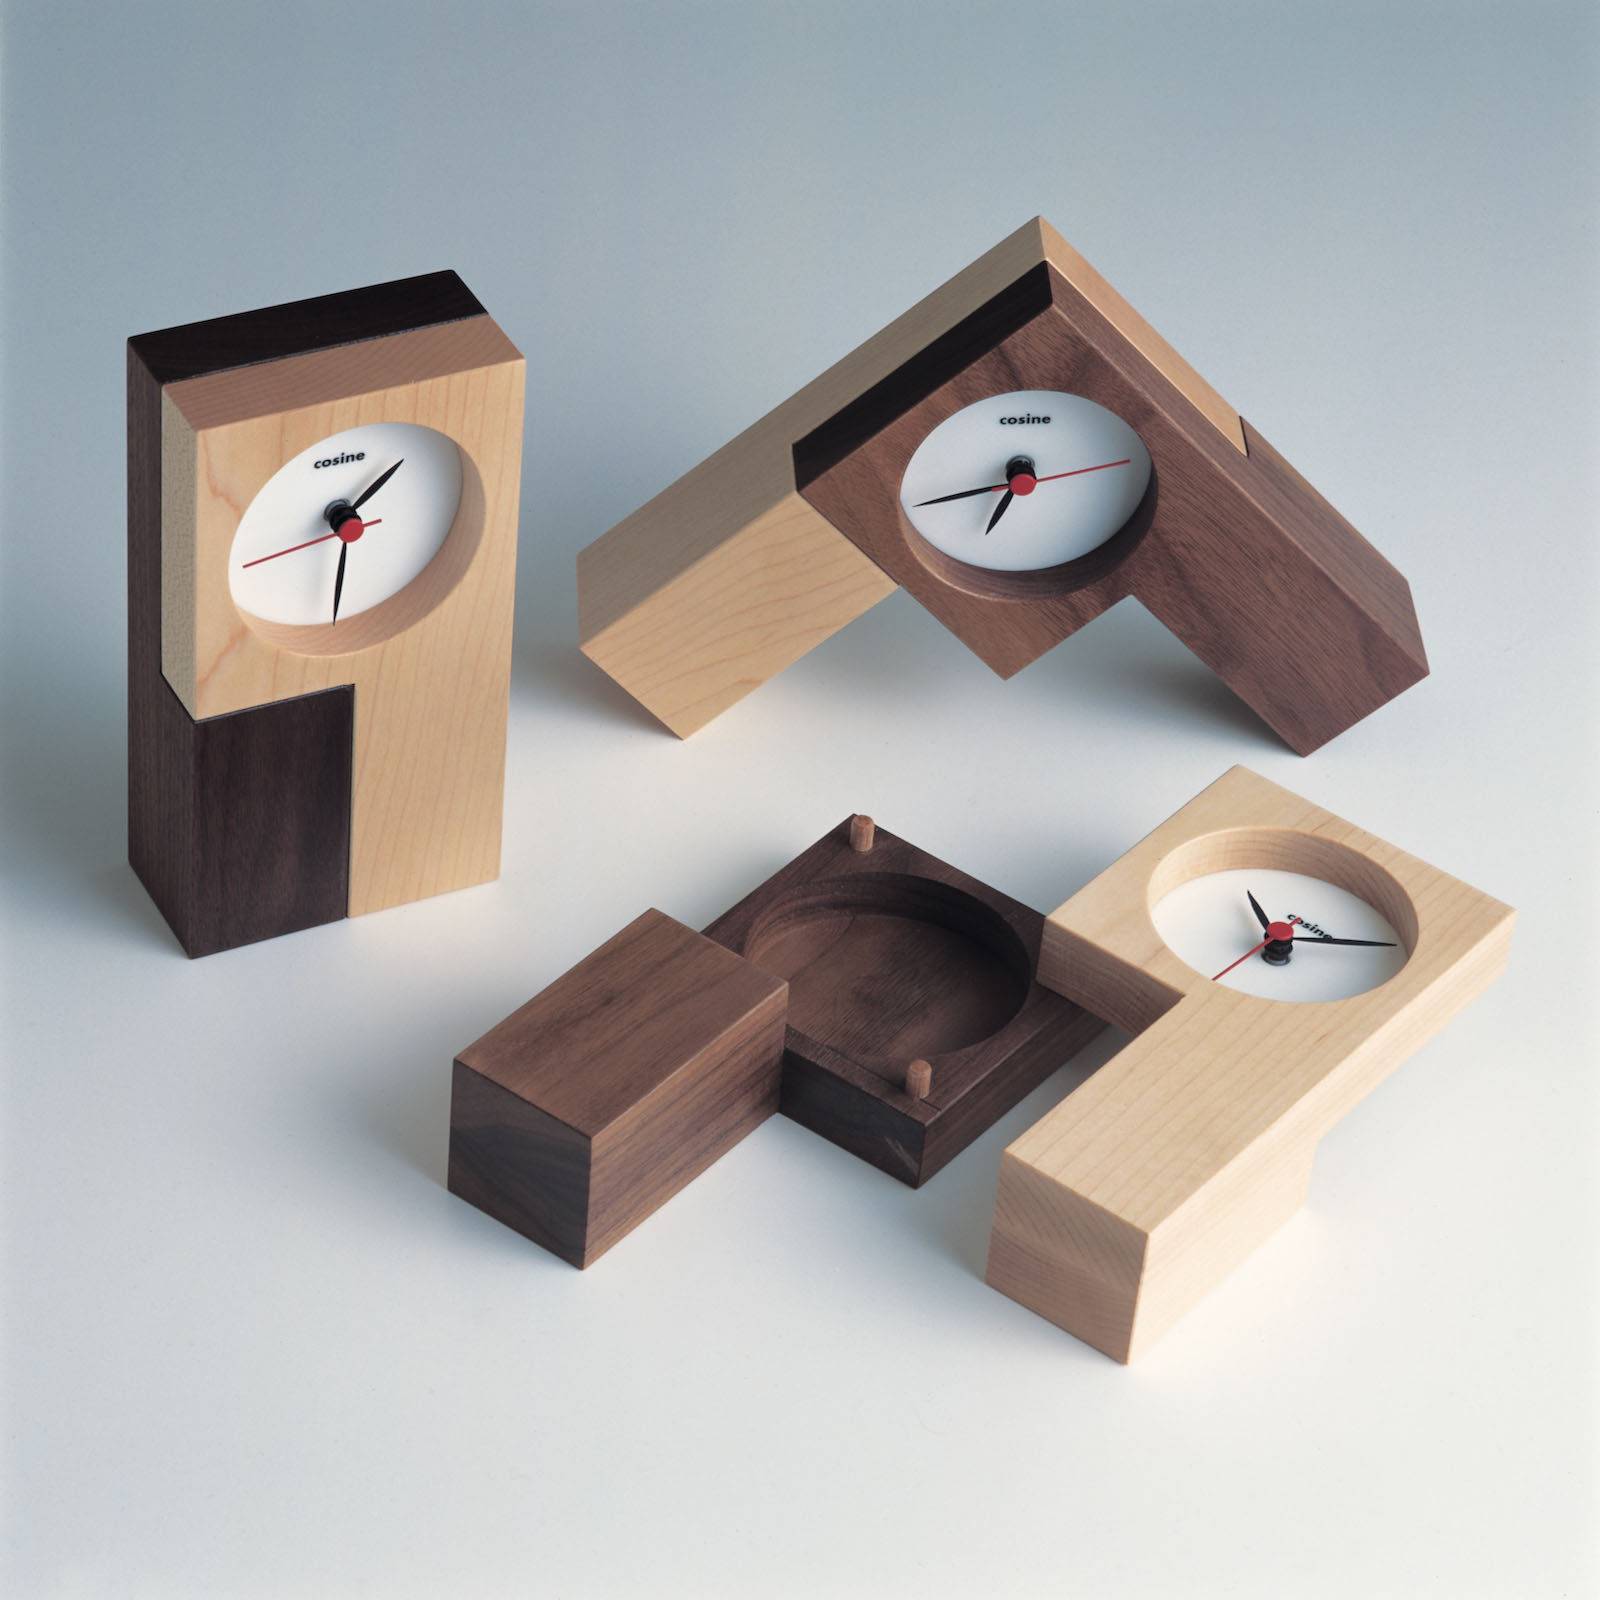 Cosine Clock | Takenobu Igarashi